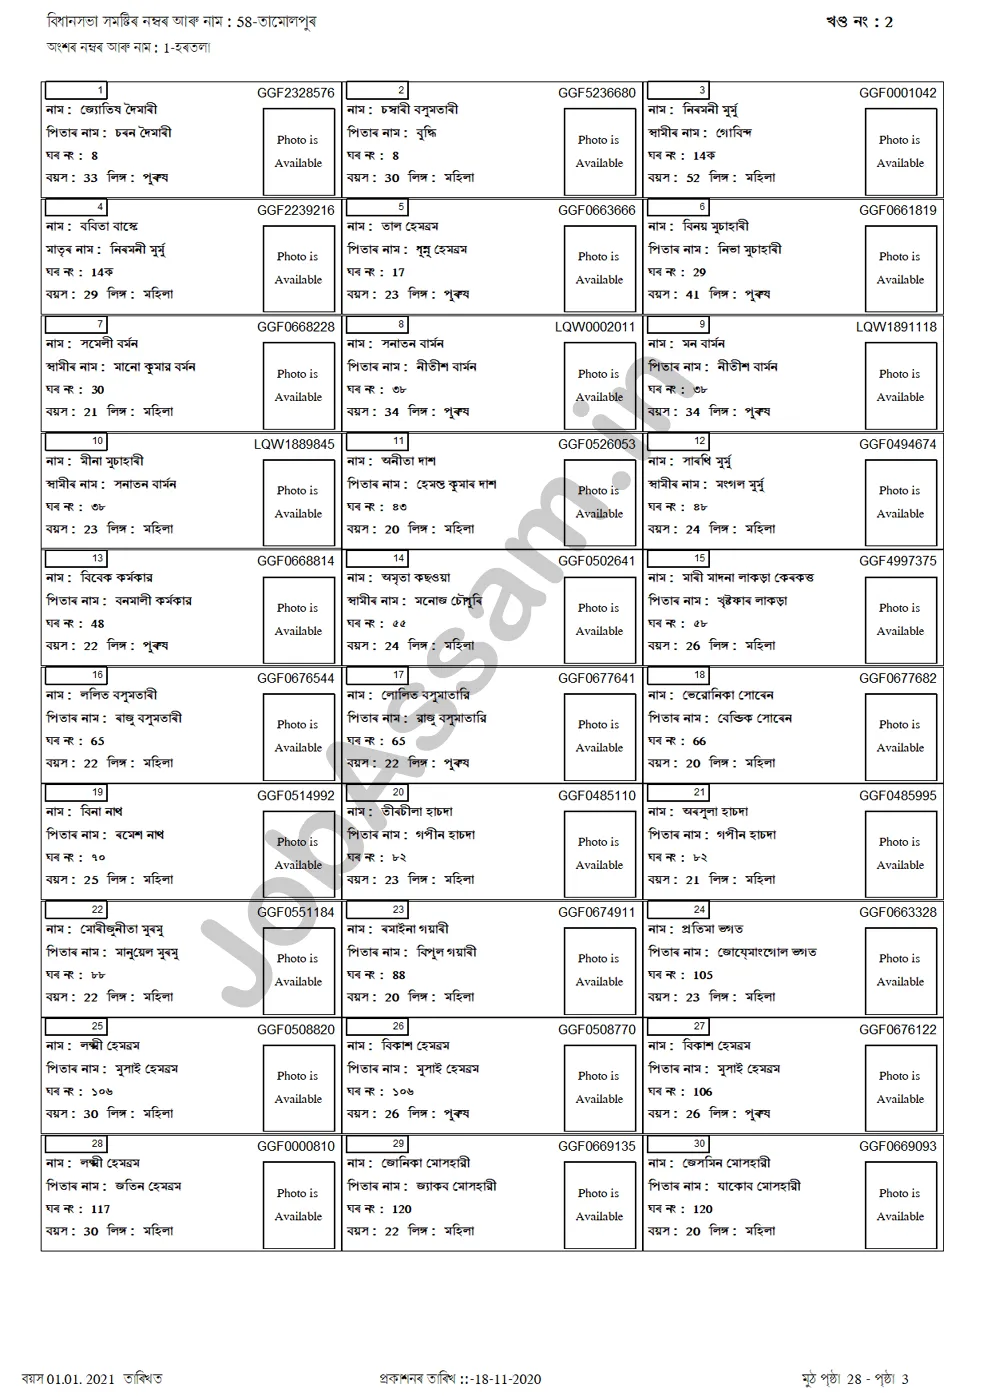 A Sample Voter List of Assam